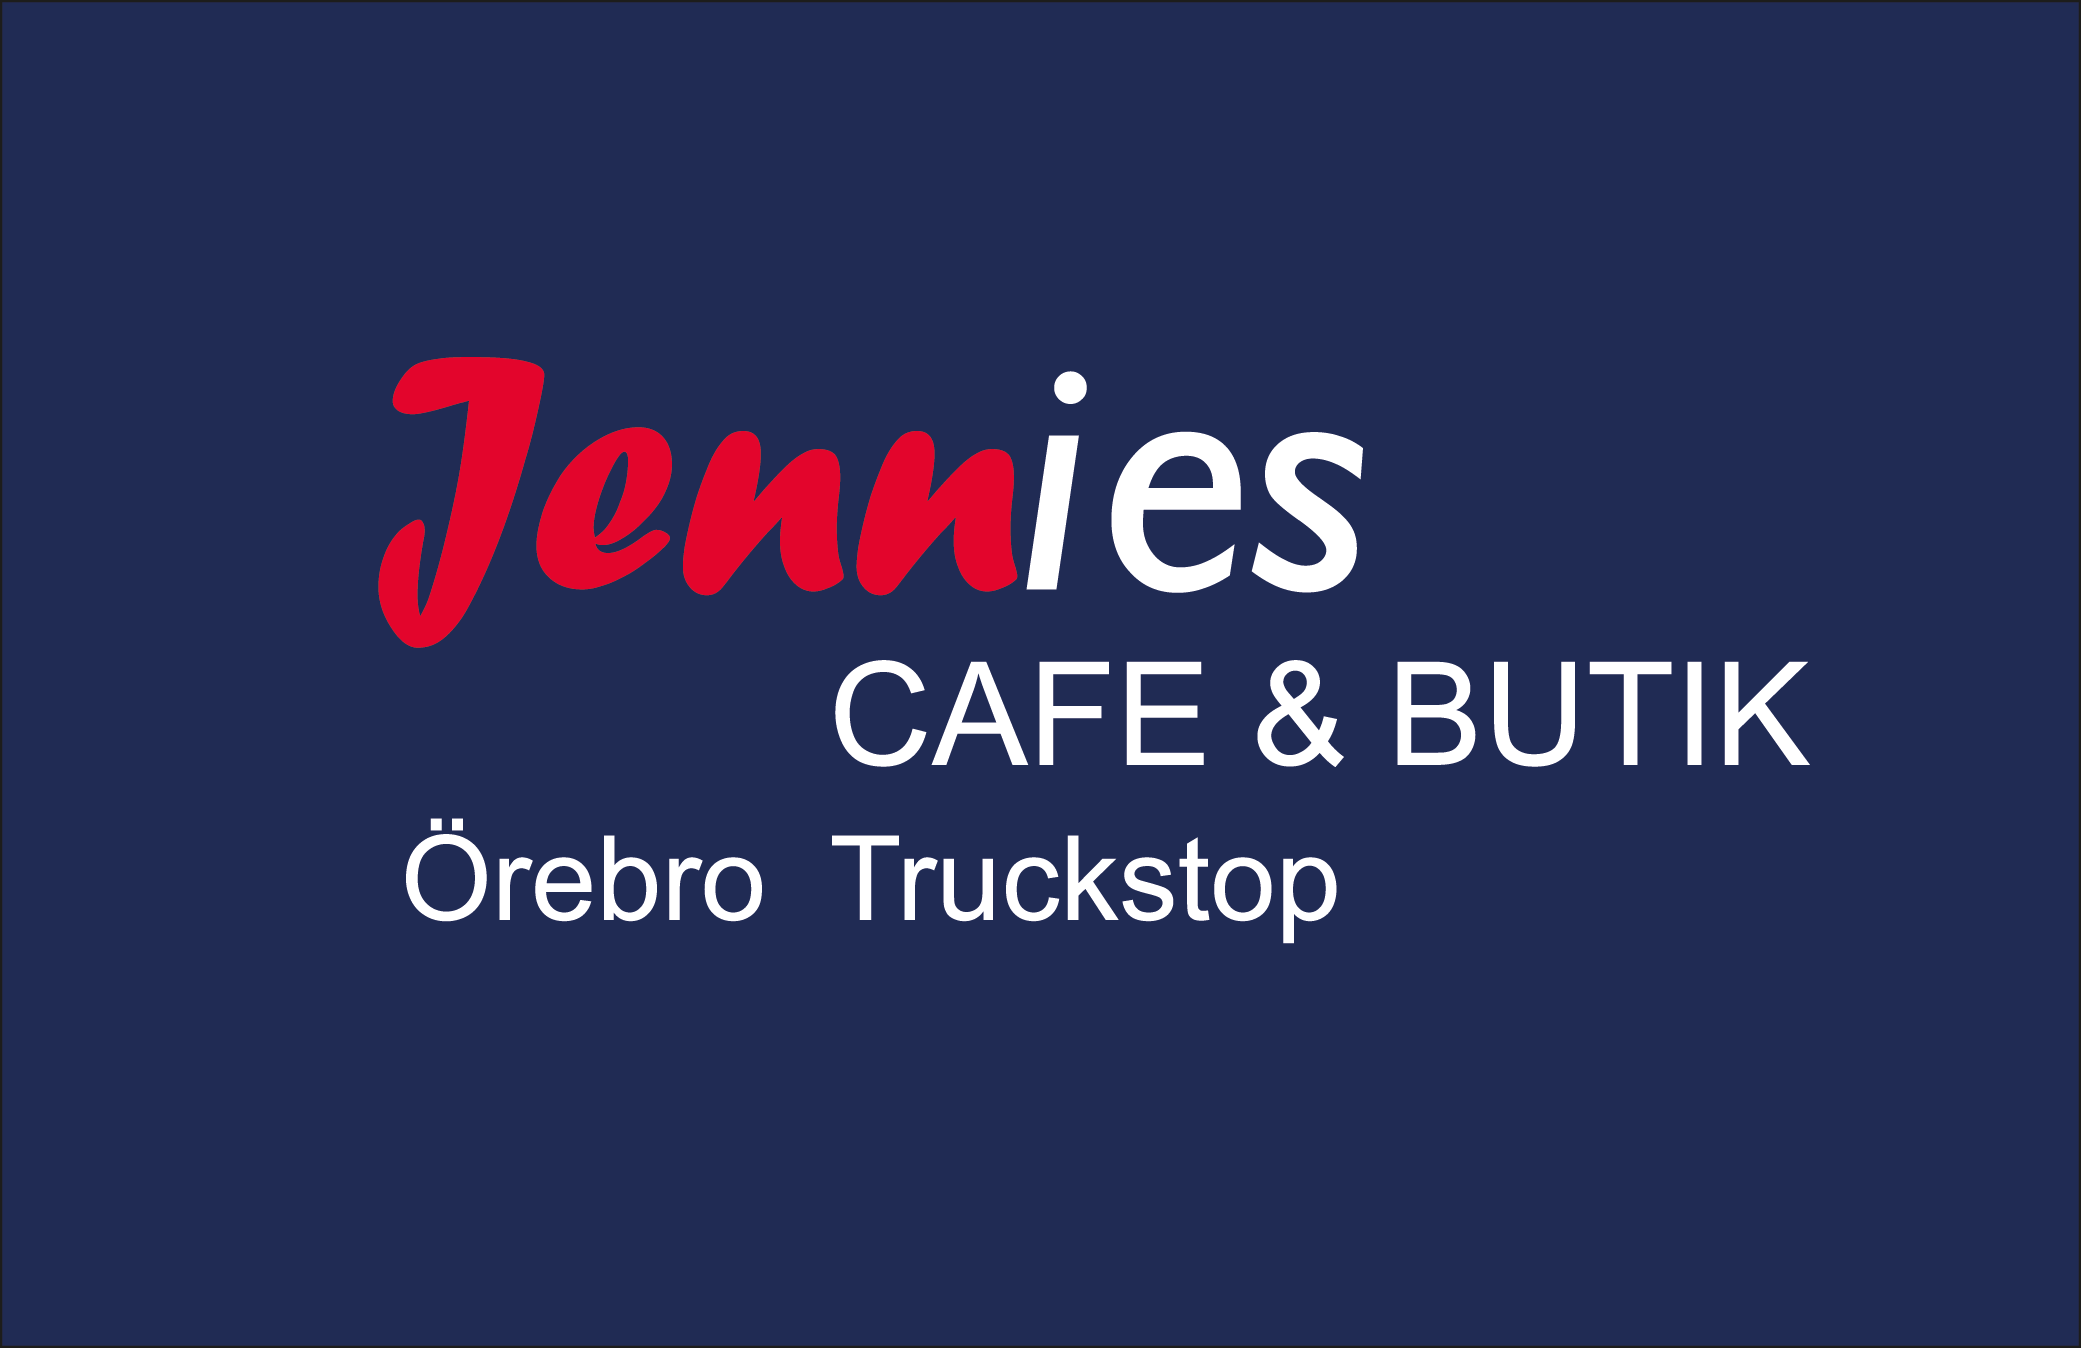 Jennies logo